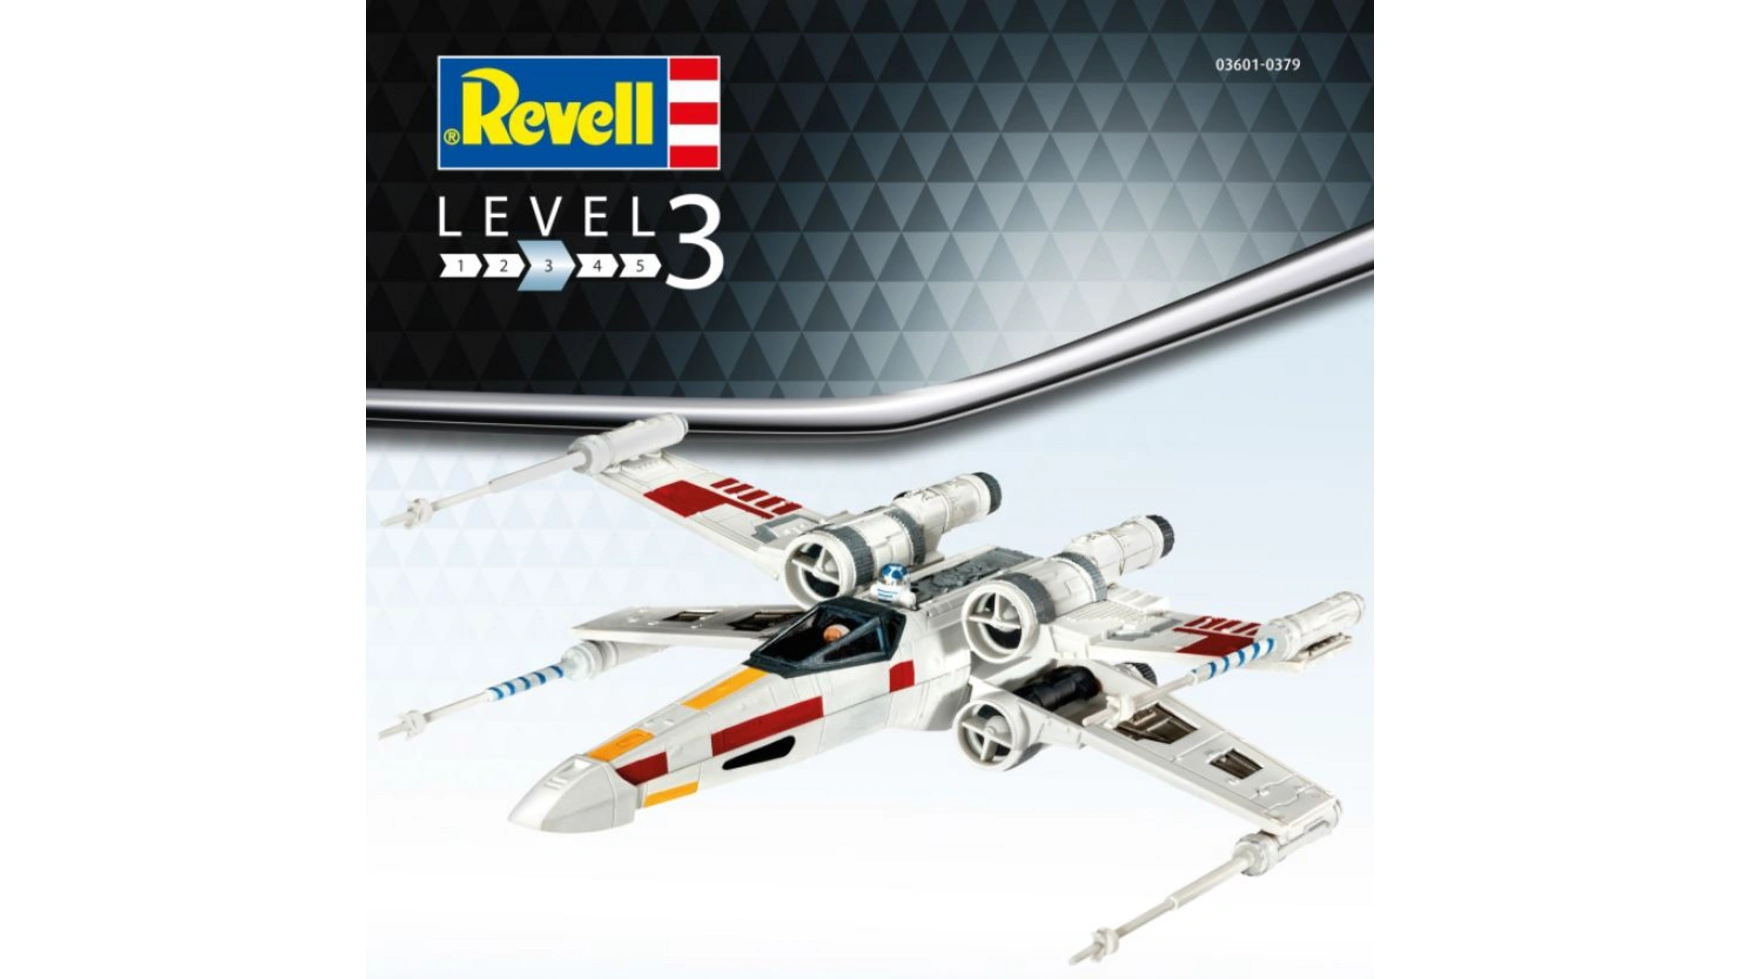 Revell Истребитель X-wing revell цвет электронной почты звездный истребитель n1